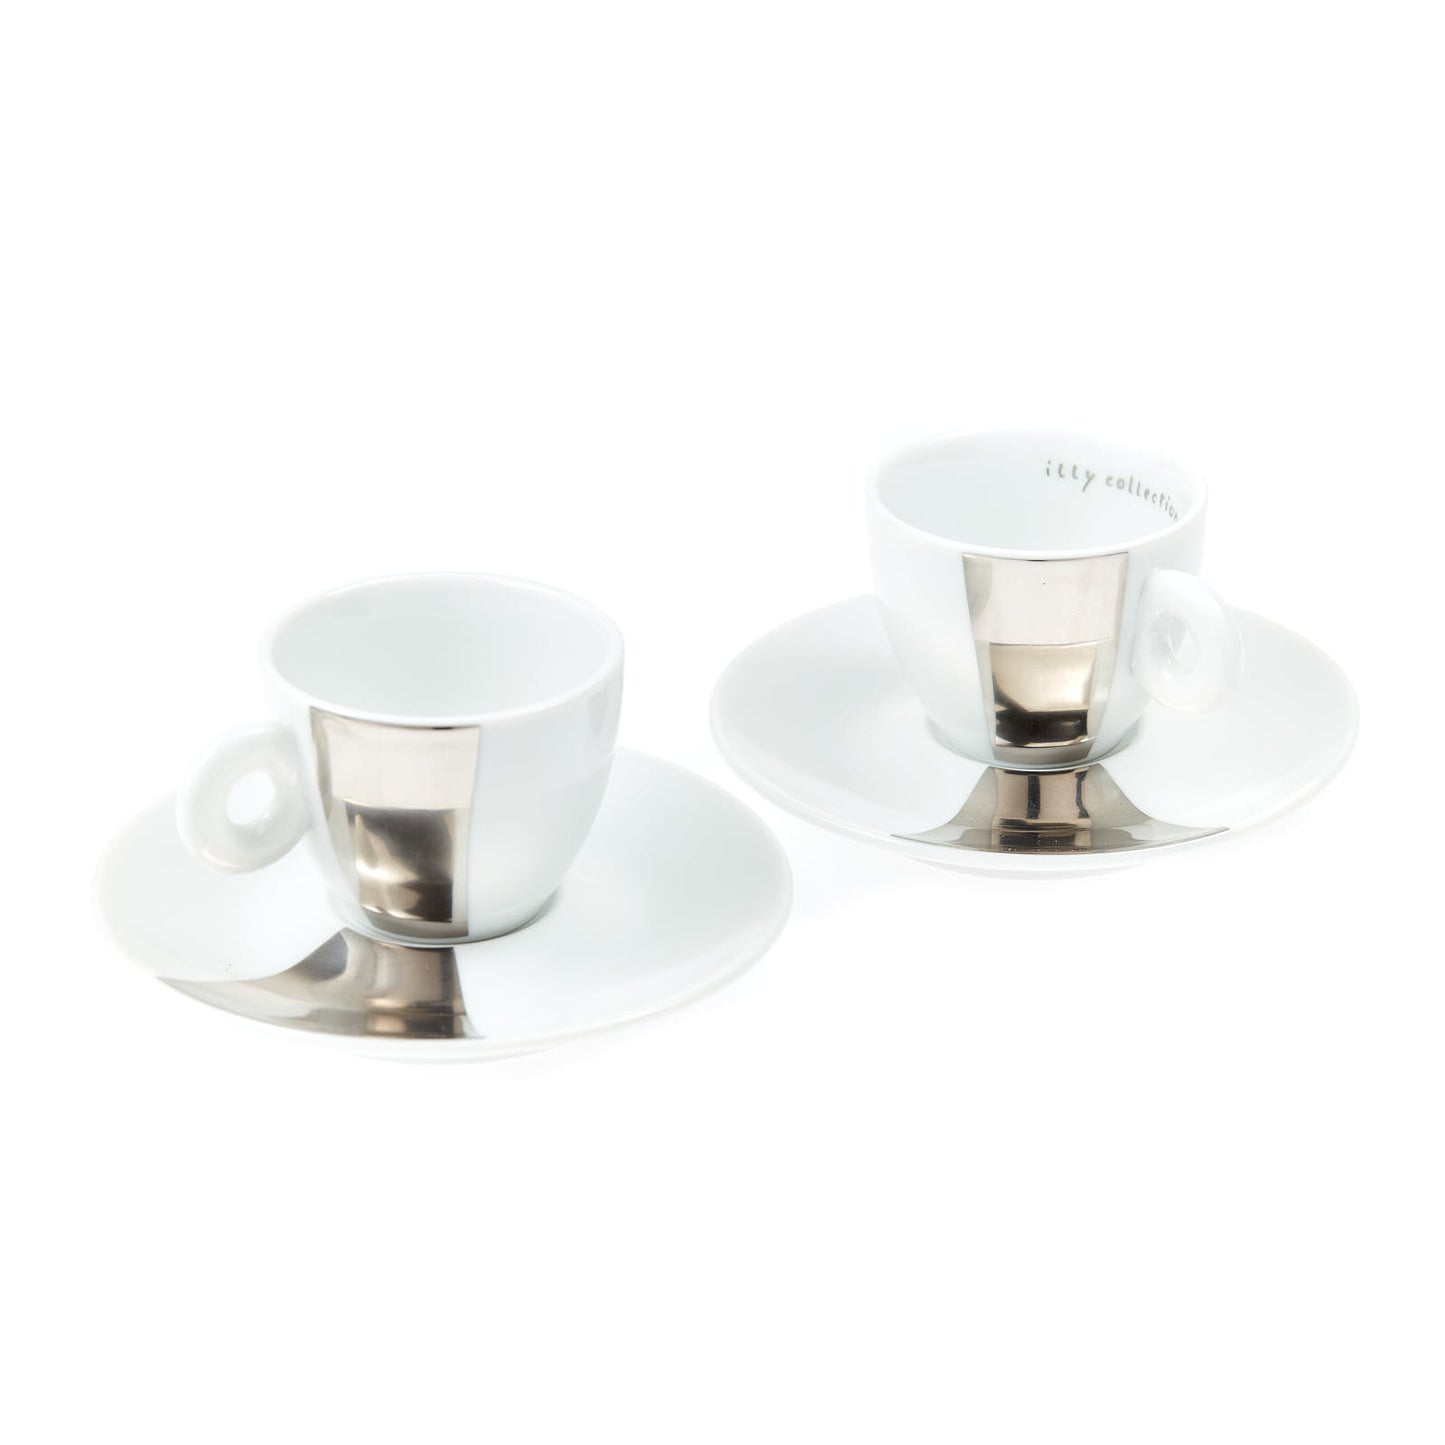 Set 2 coffee cups with mirror segment (designed by Michelangelo Pistoletto) mod. C